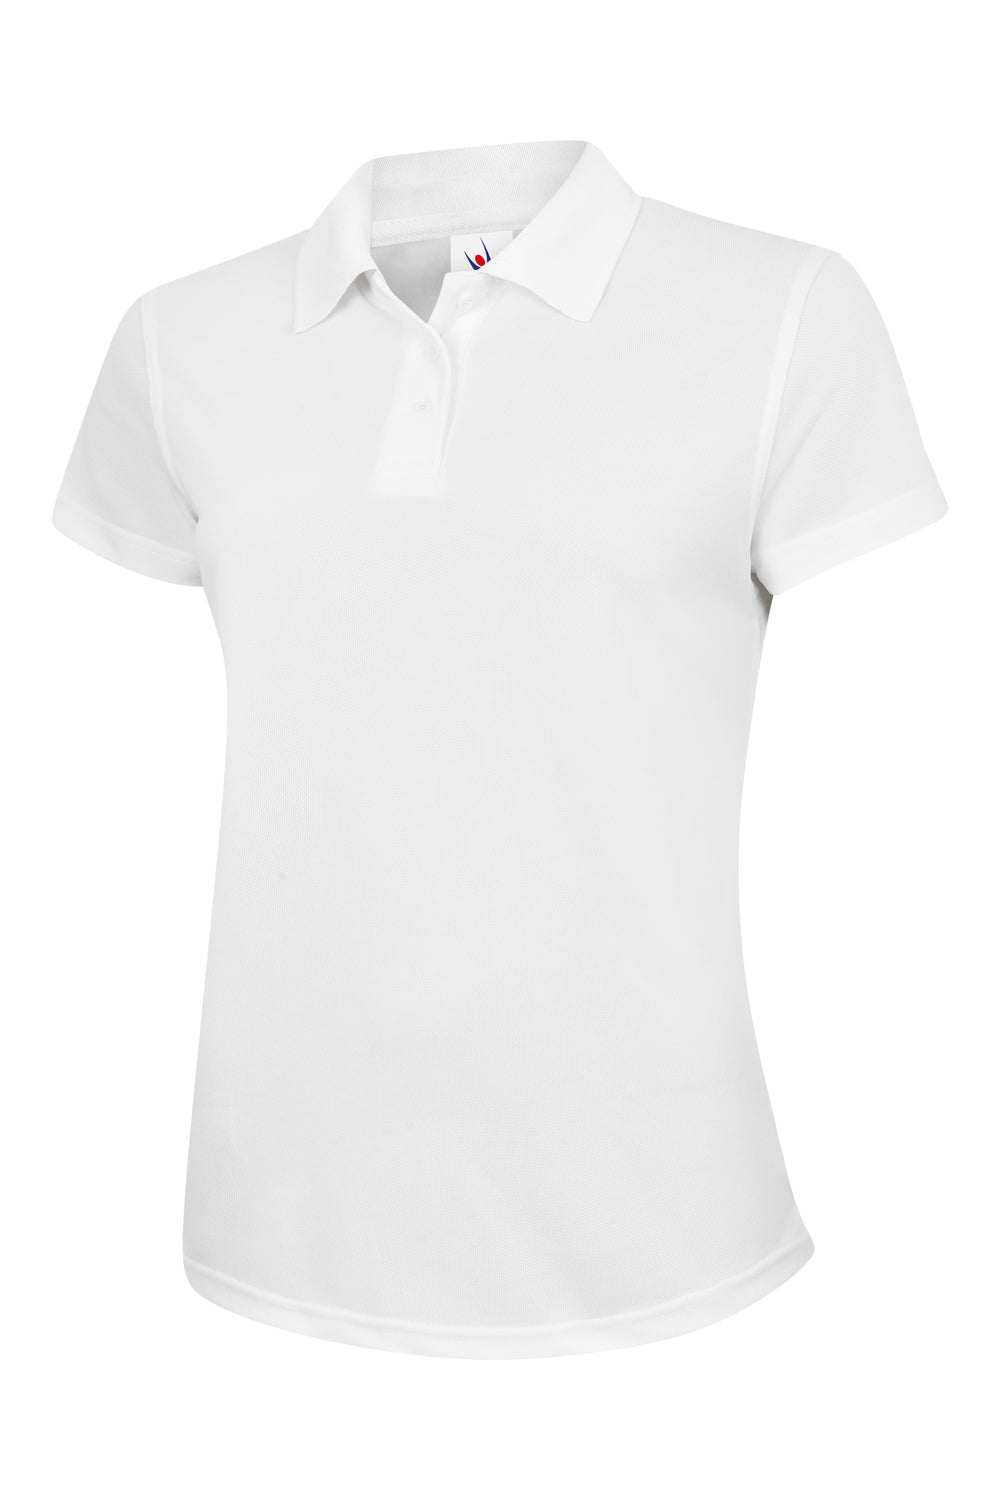 Uneek Ladies Super Cool Workwear Poloshirt UC128 - White